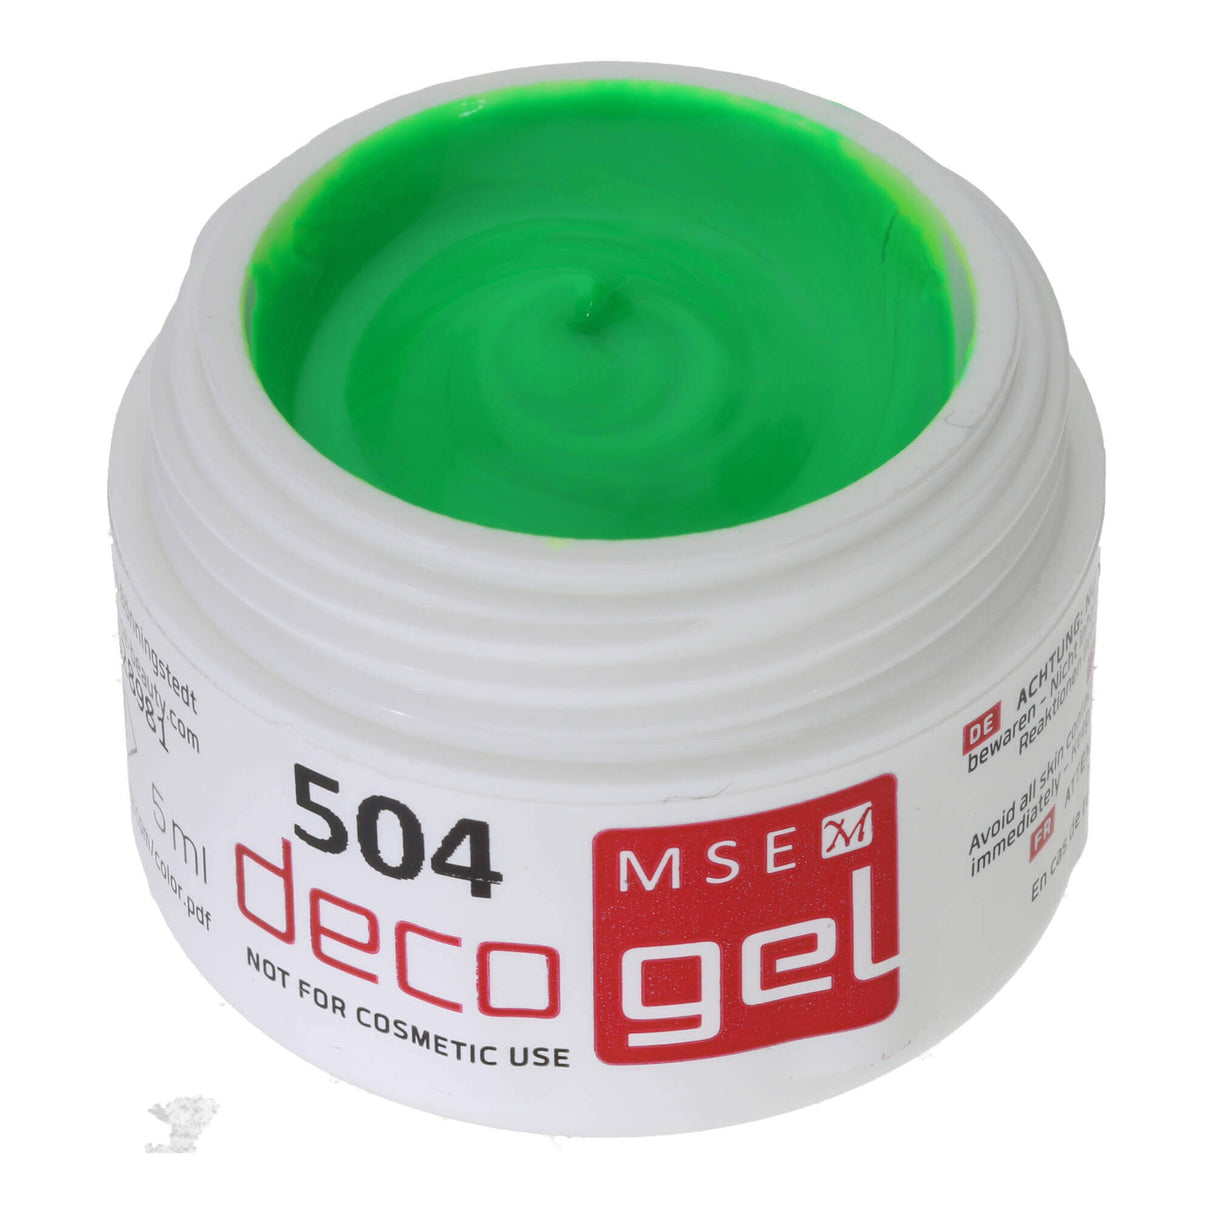 #504 Premium-DEKO Color Gel 5ml Neon Grün NOT FOR COSMETIC USE